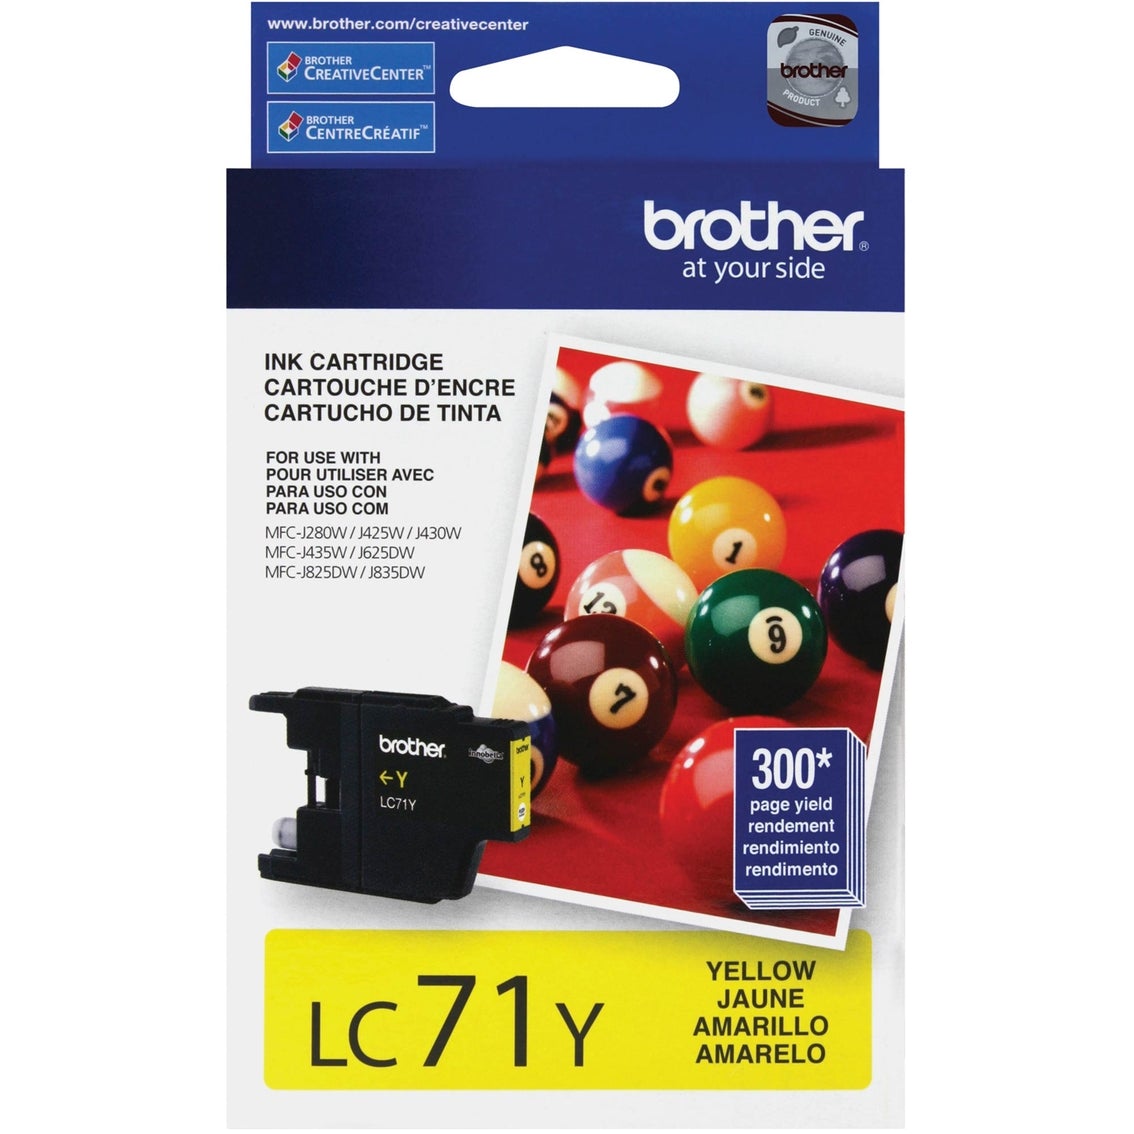 Absolute Toner Brother LC71YS Yellow Genuine OEM Ink Cartridge | LC71Y Original Brother Cartridges